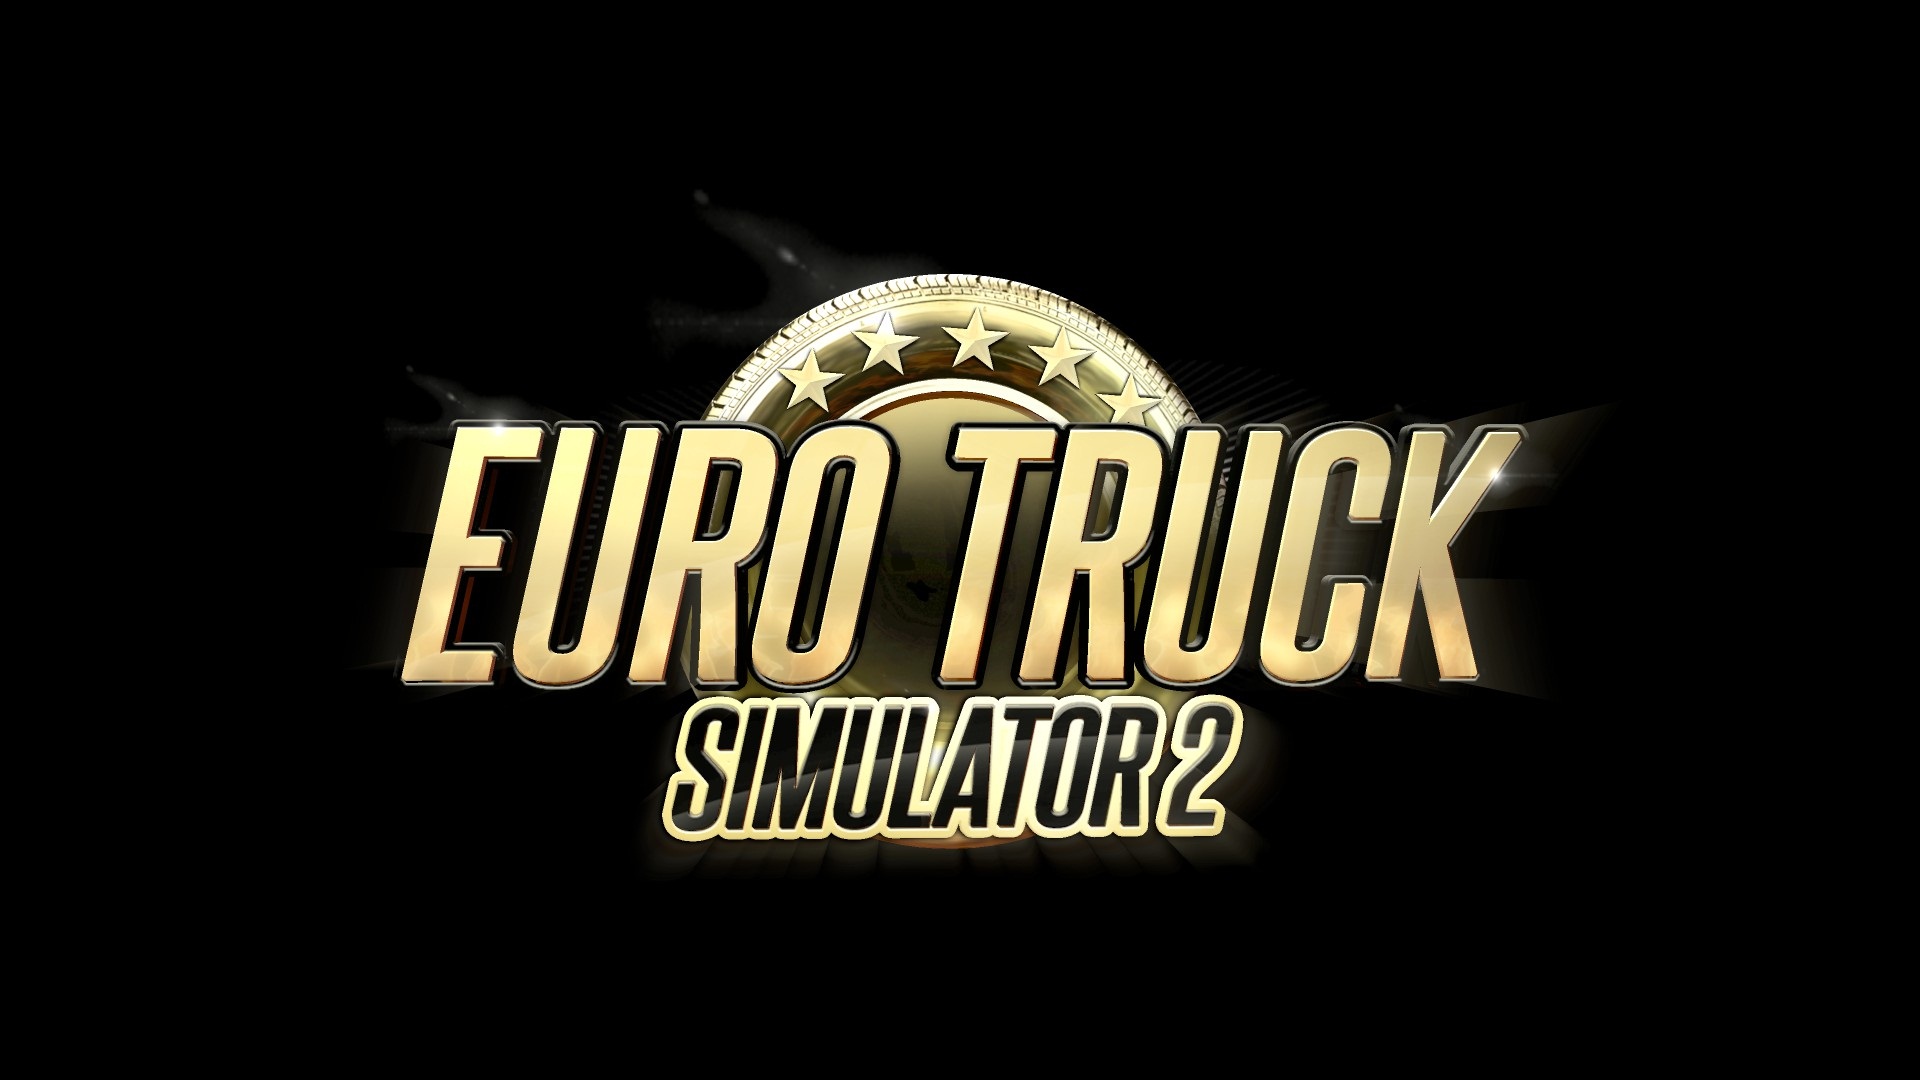 Euro Truck Simulator 2 Hd Wallpaper